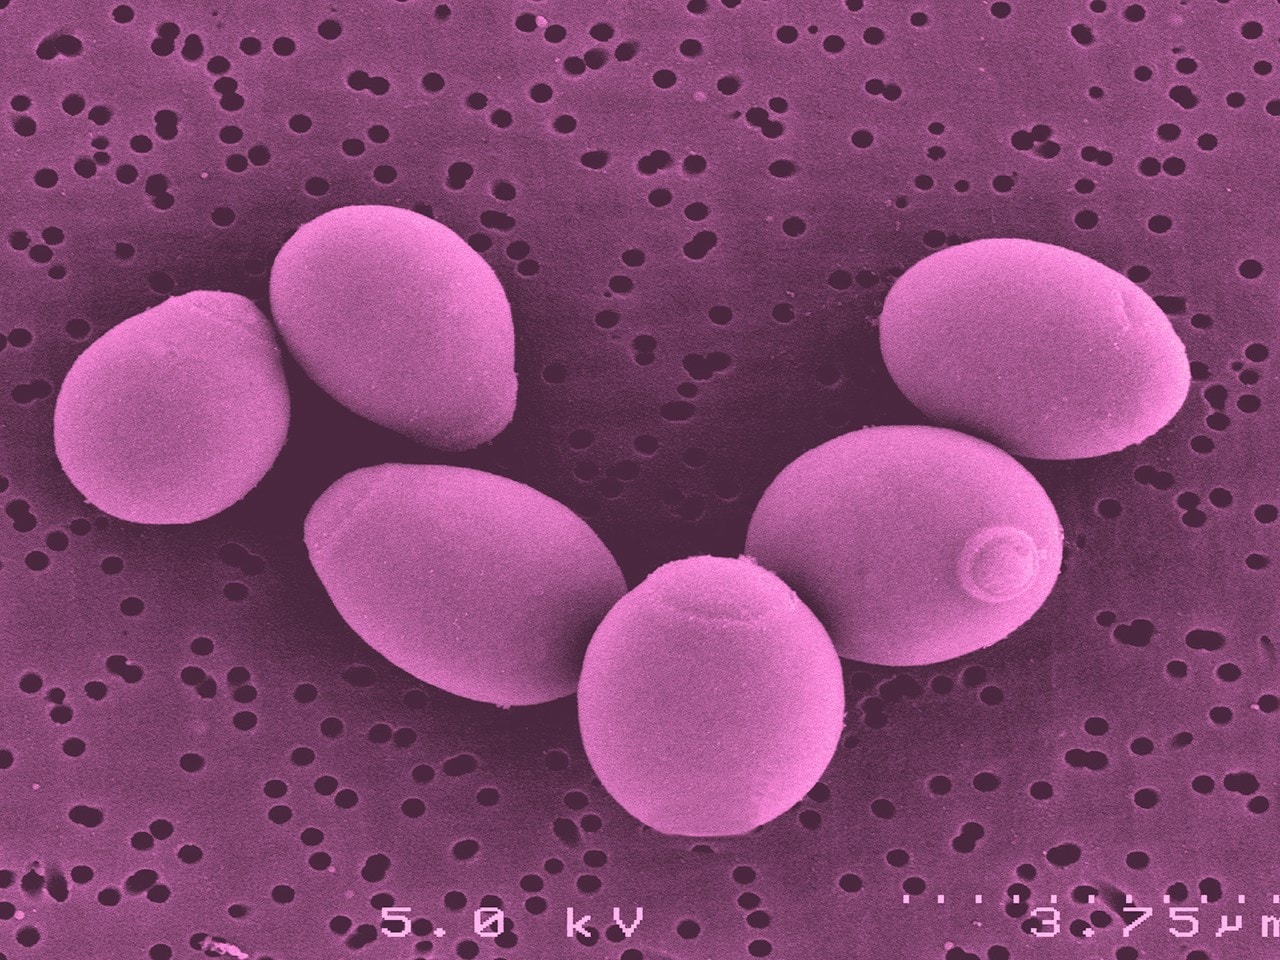 Saccharomyces boulardii bacteria